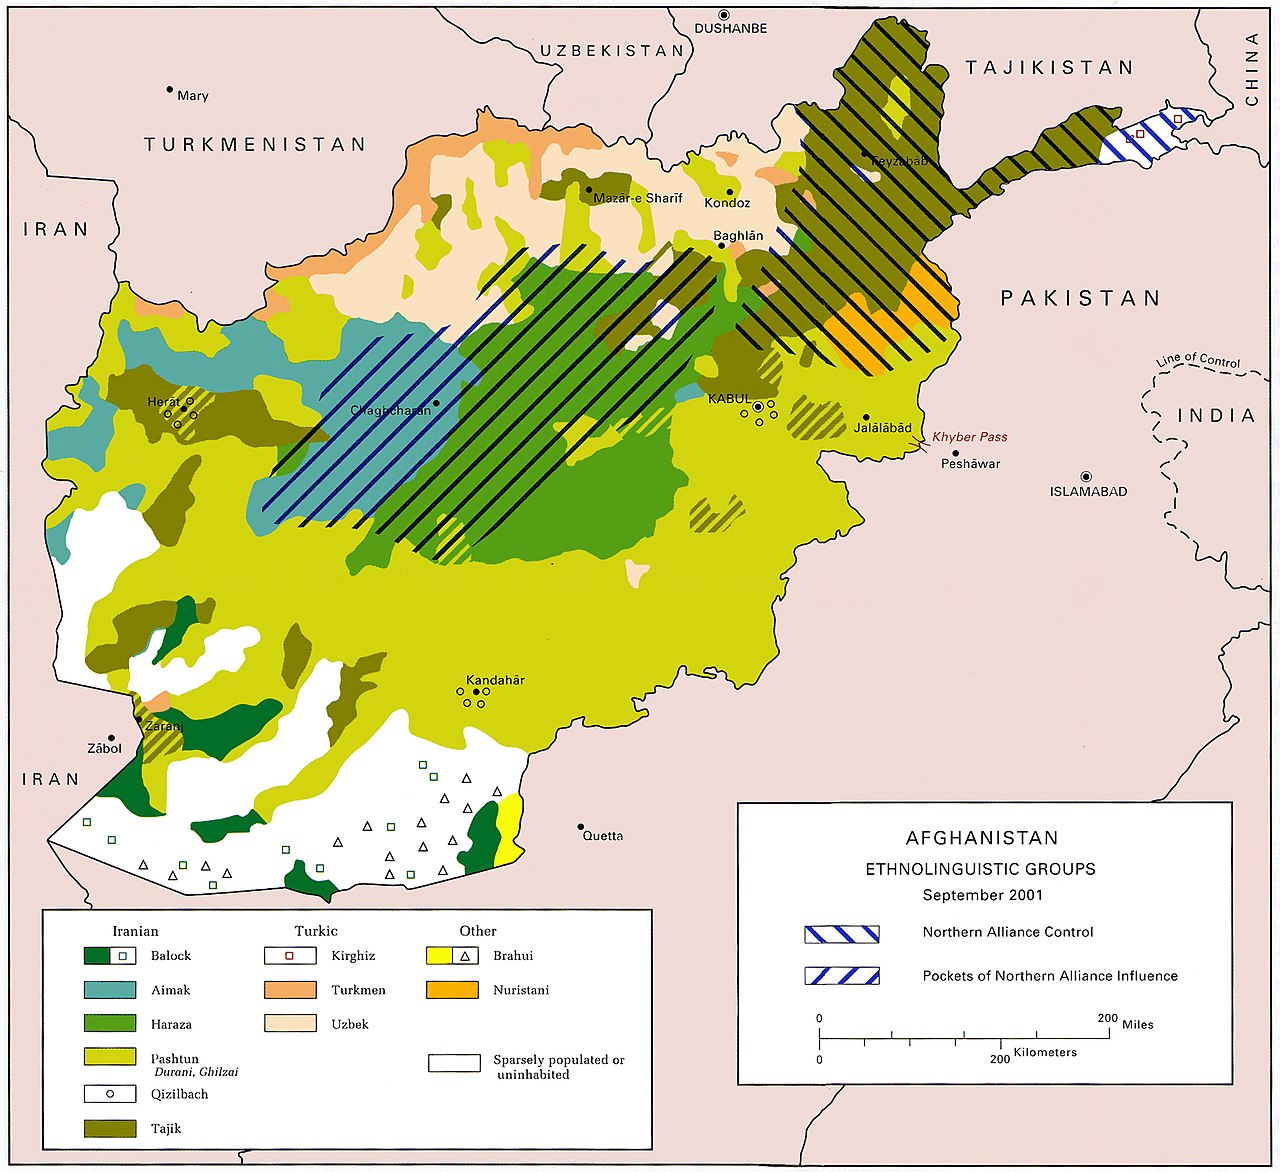 1280px-US_Army_ethnolinguistic_map_of_Afghanistan_--_circa_2001-09.jpg